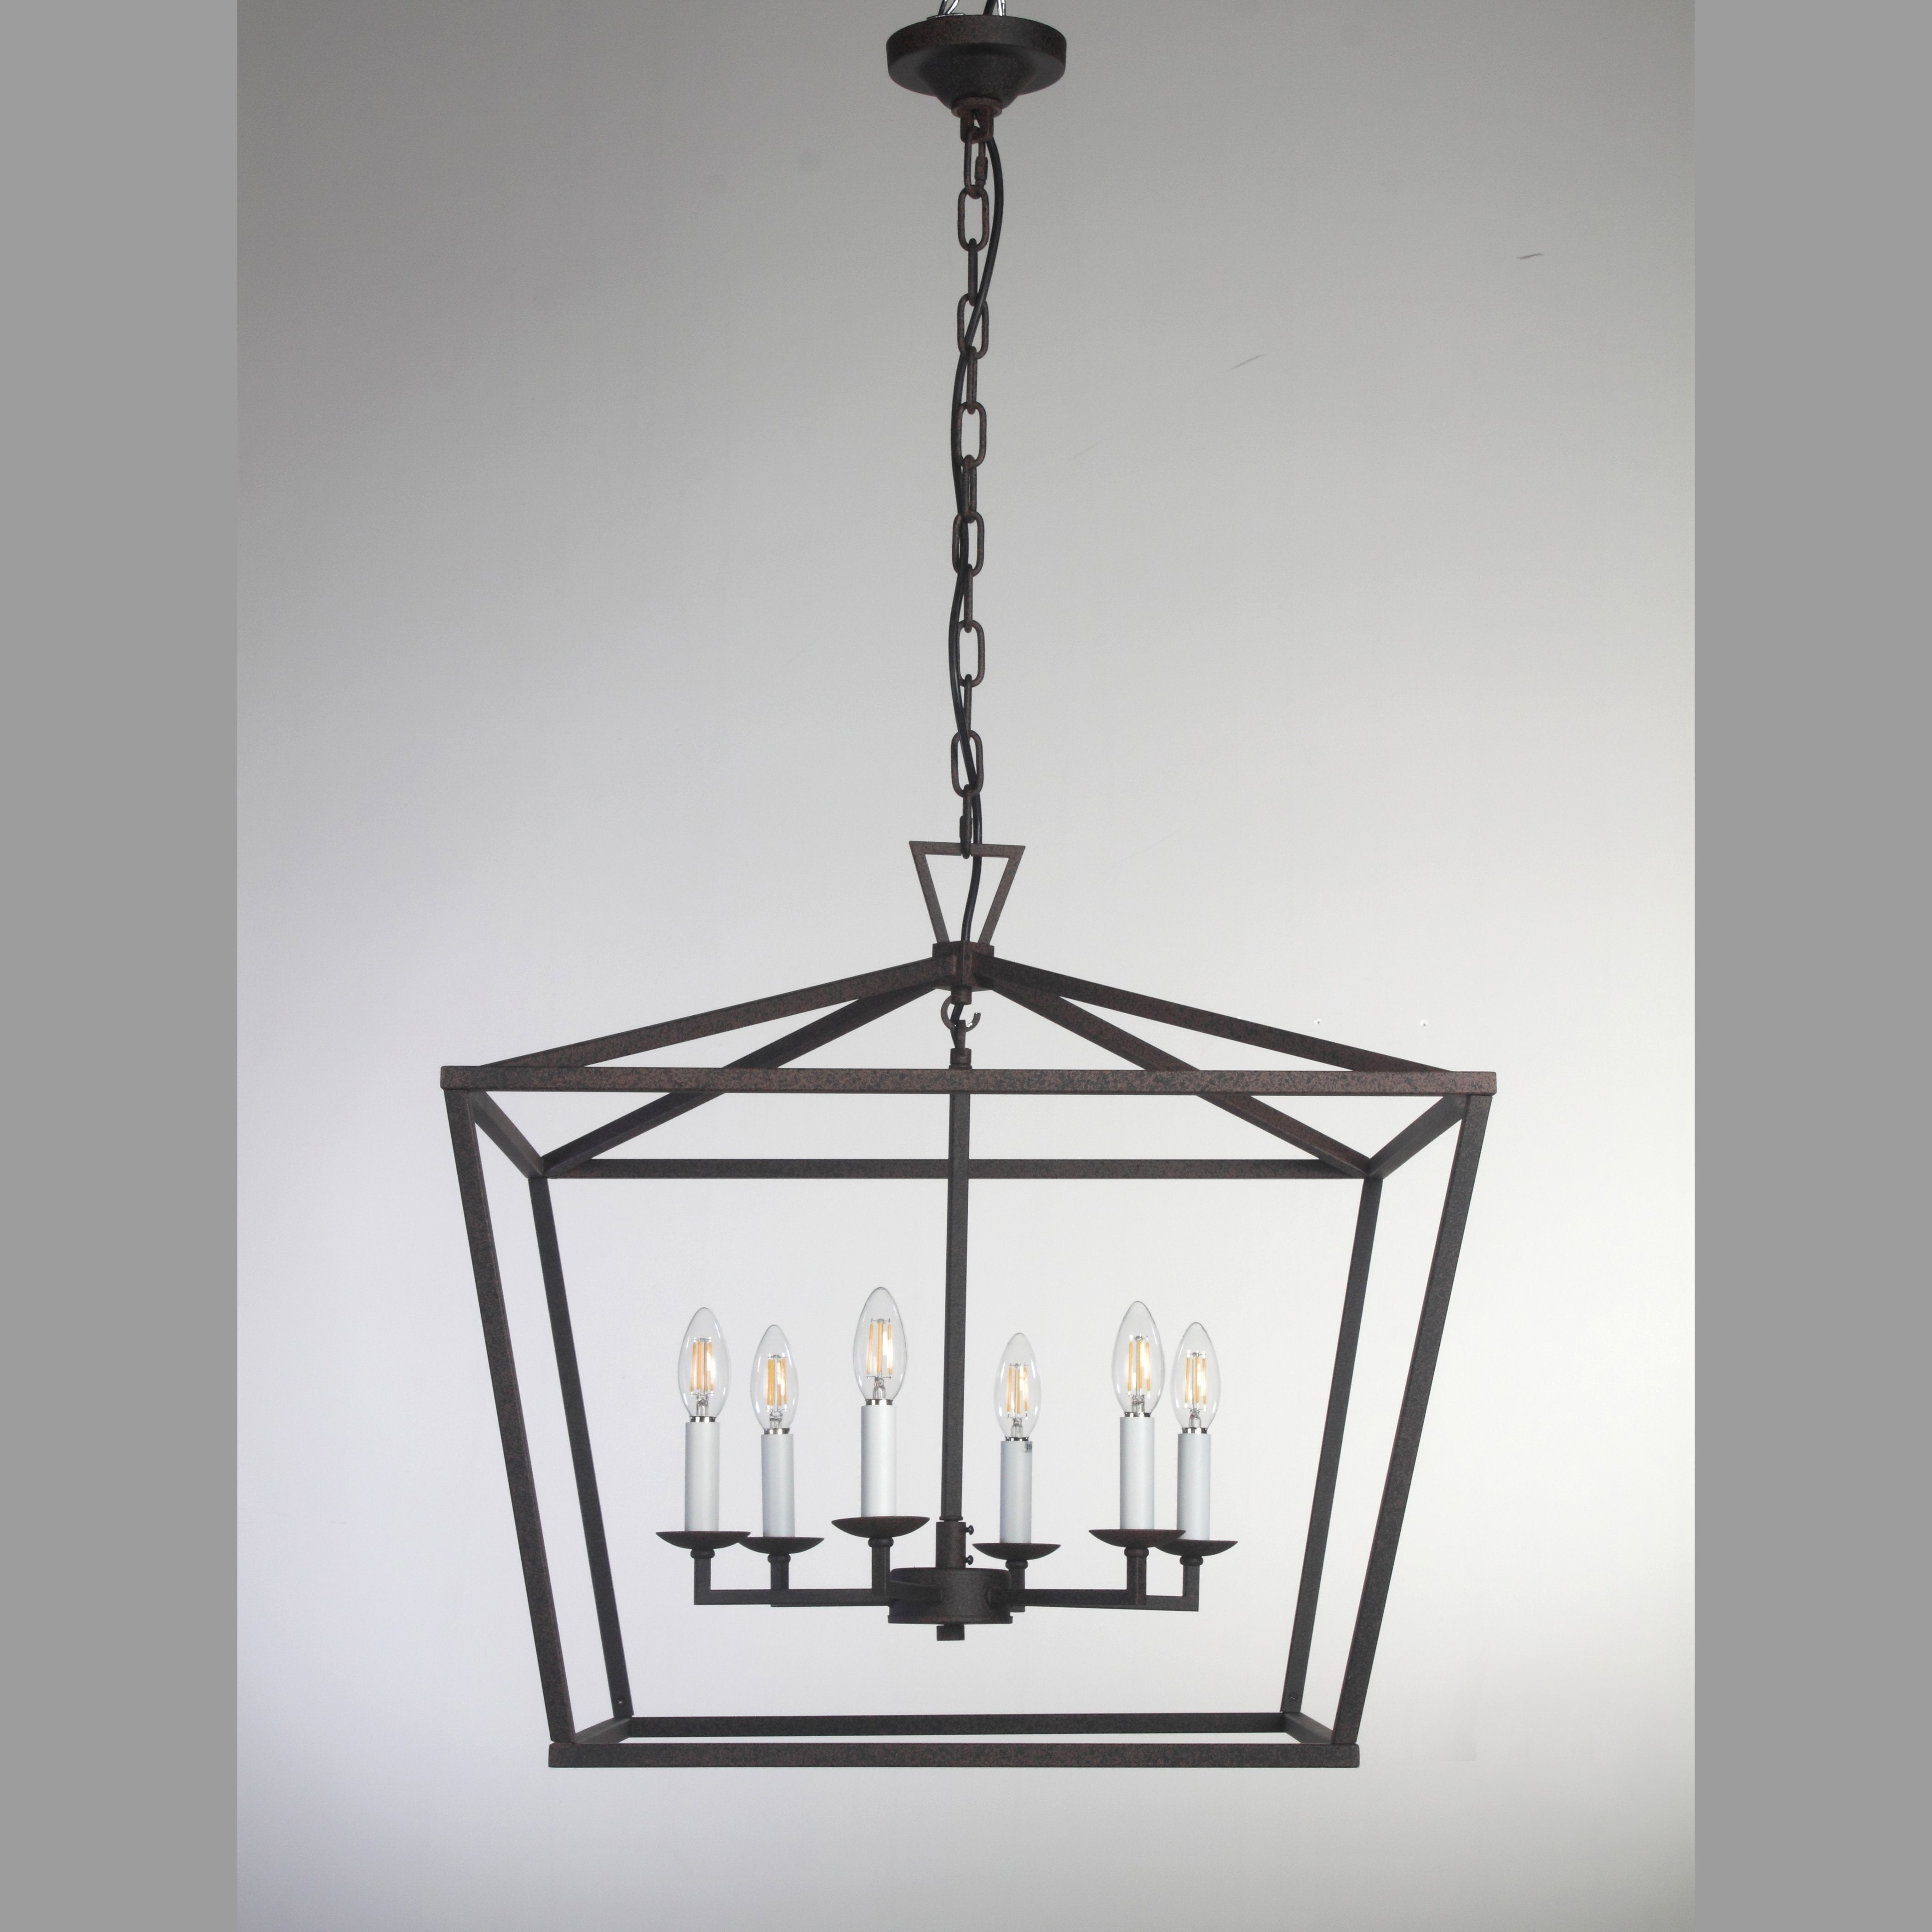 Chris Graff Lantern Geometric Chandelier - Italian Concept - Size